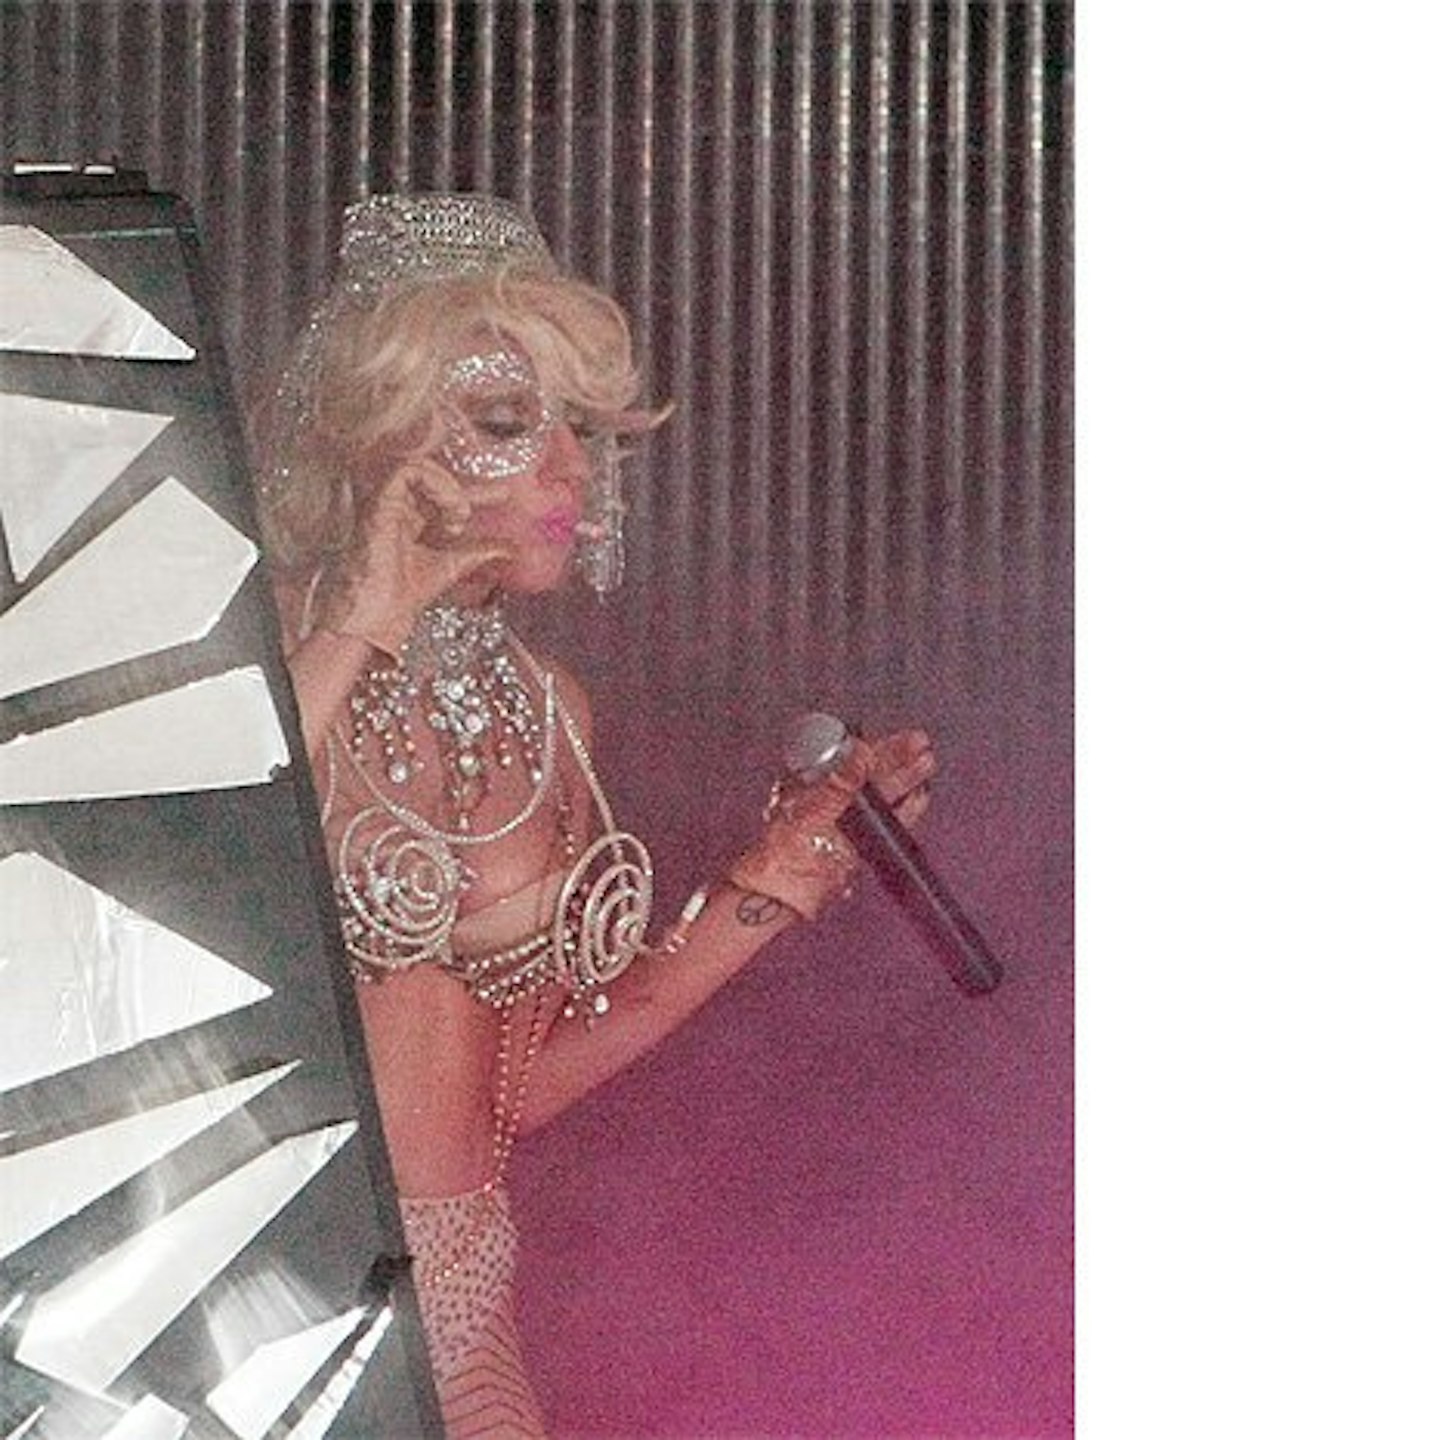 Gaga sneaks a smoke during her performance